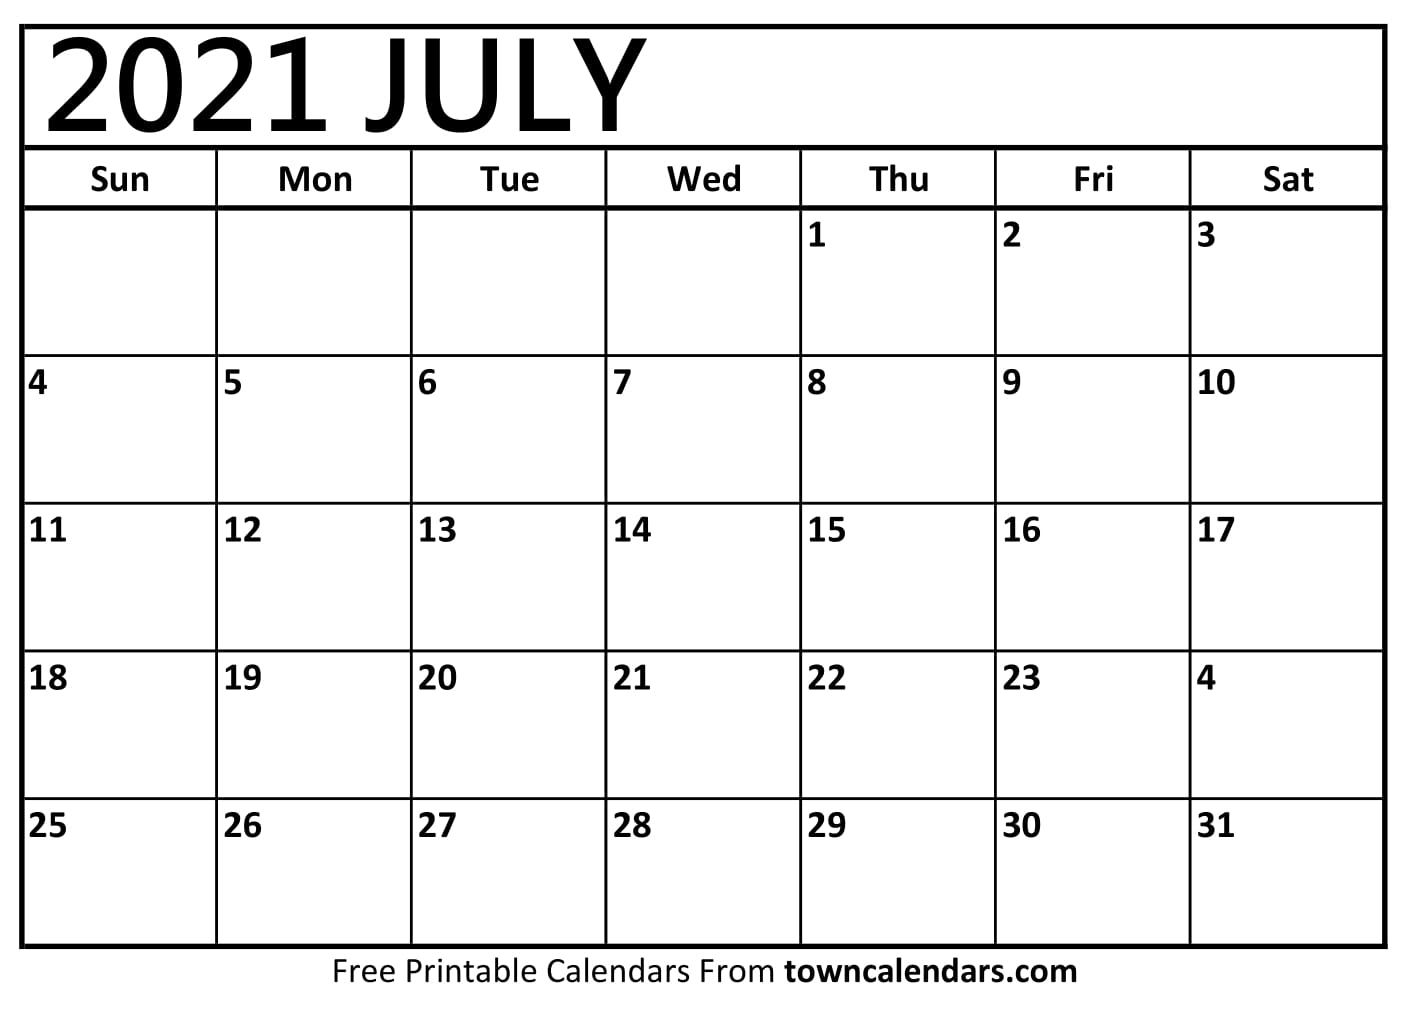 July 2021 kalendar Free Printable